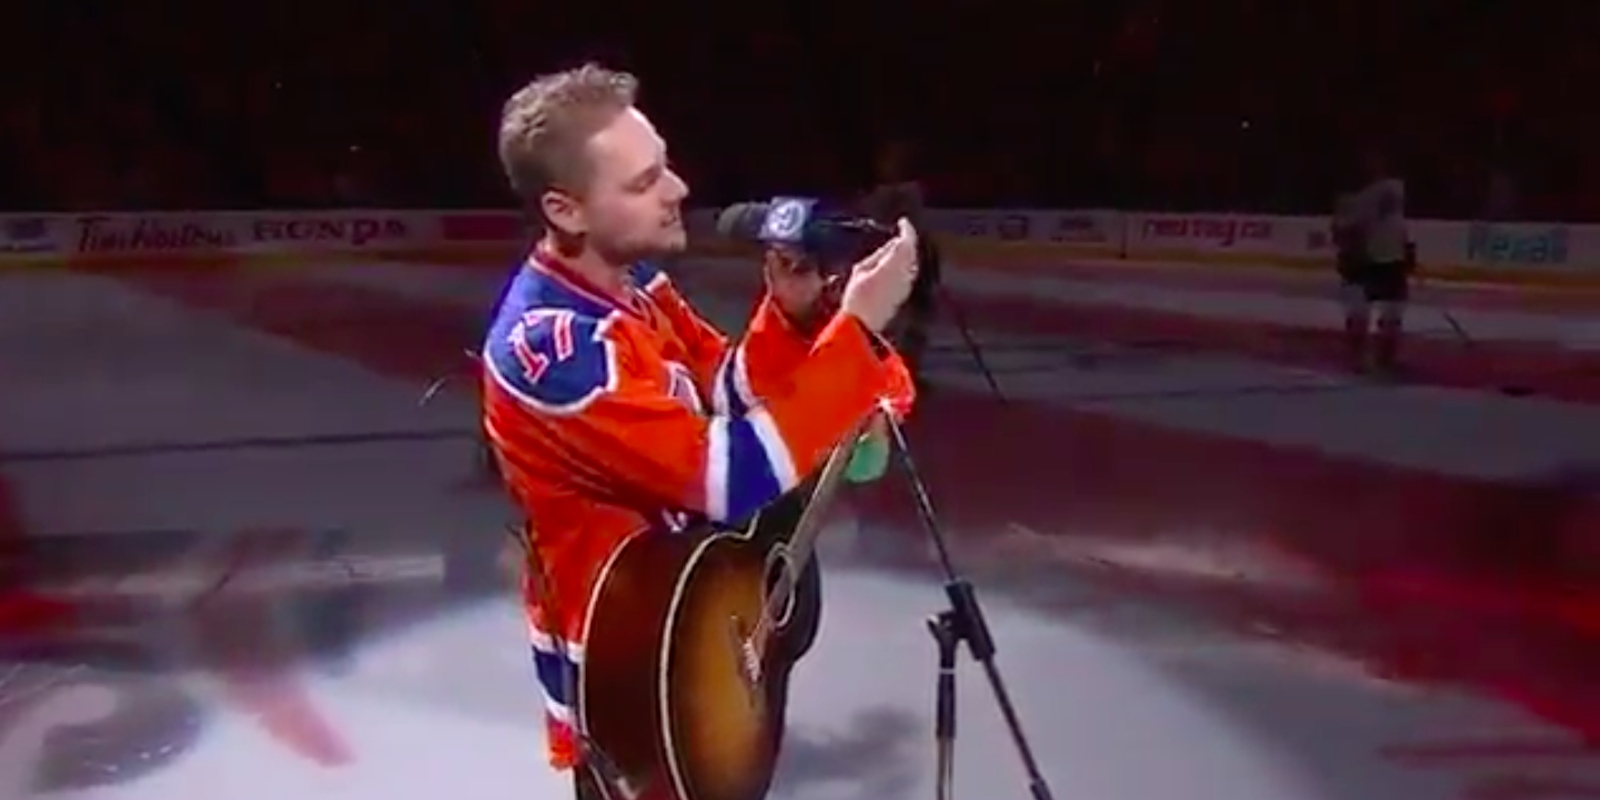 hockey fans sing national anthem: singer's broken microphone shown